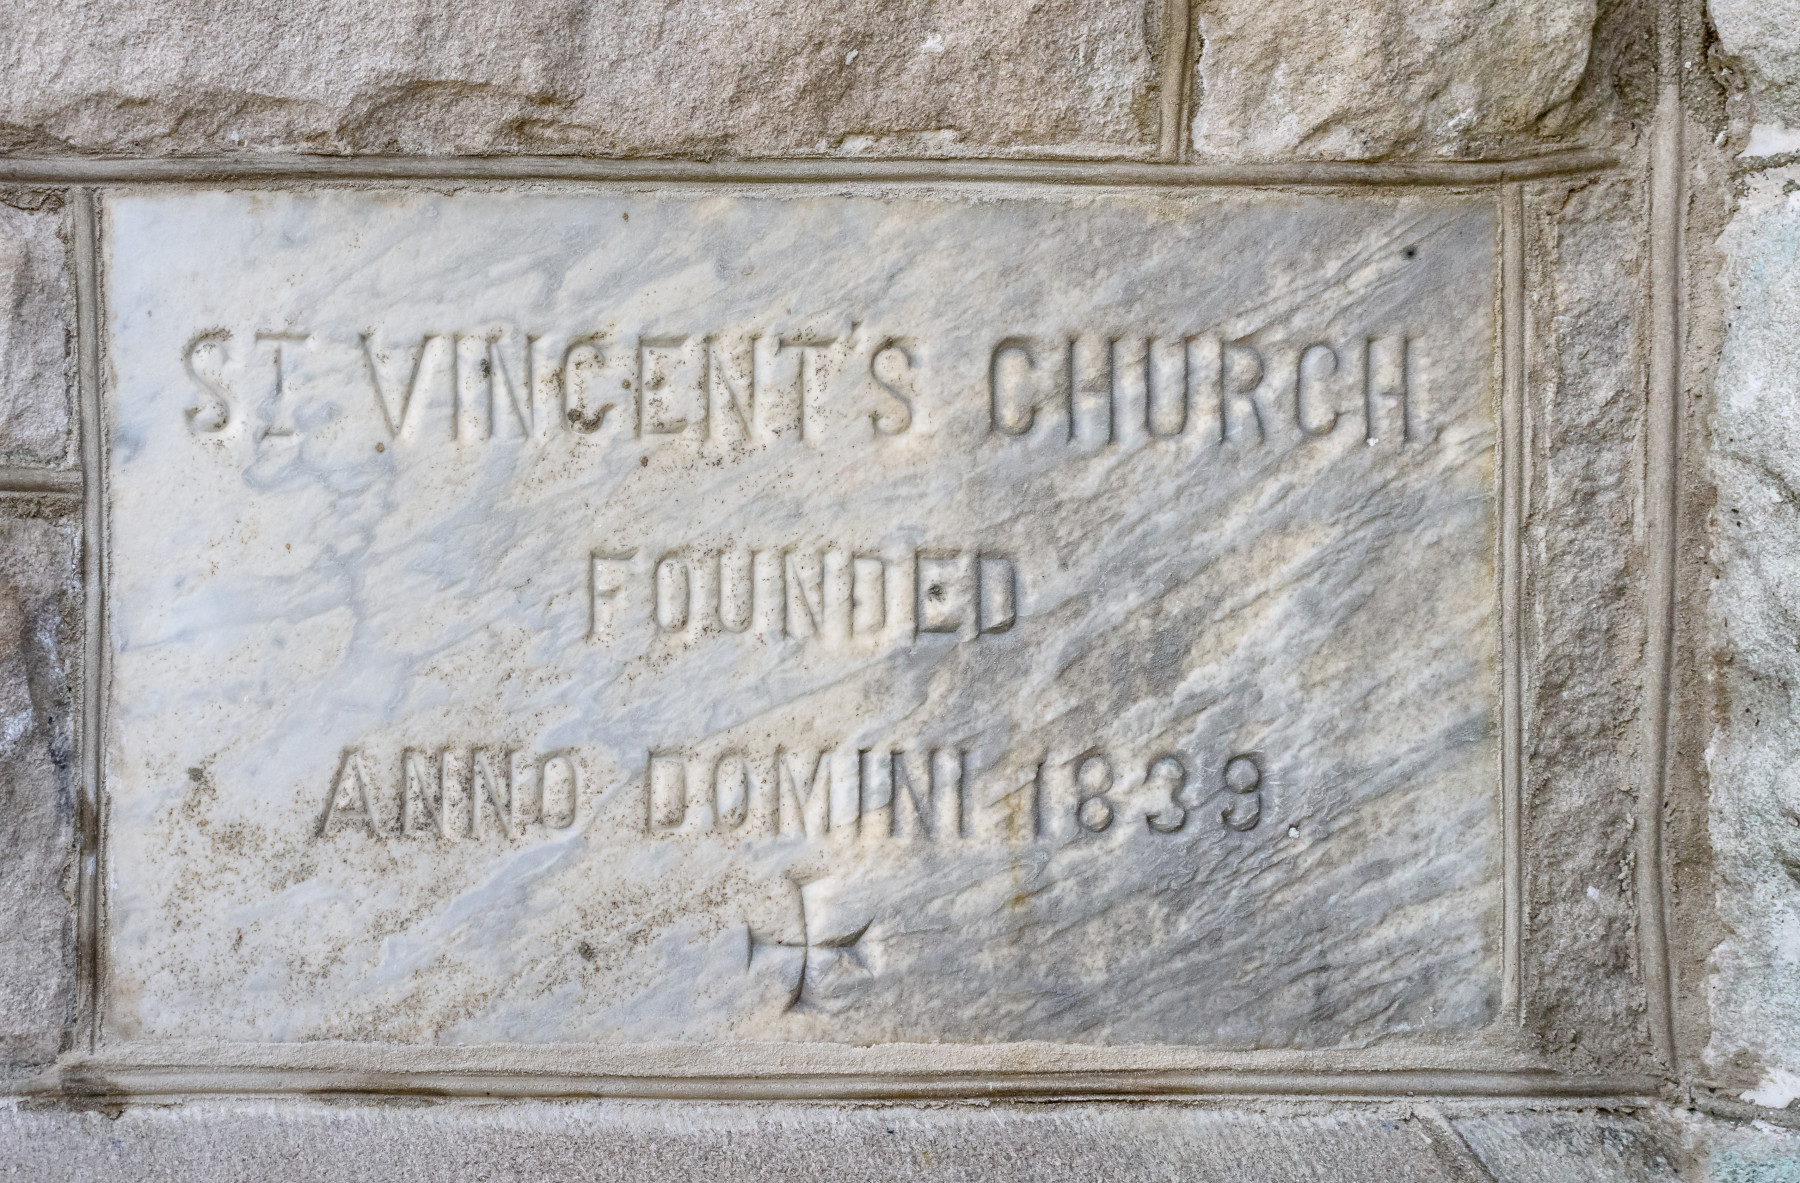 St. Vincent's Madison NJ founded 1839